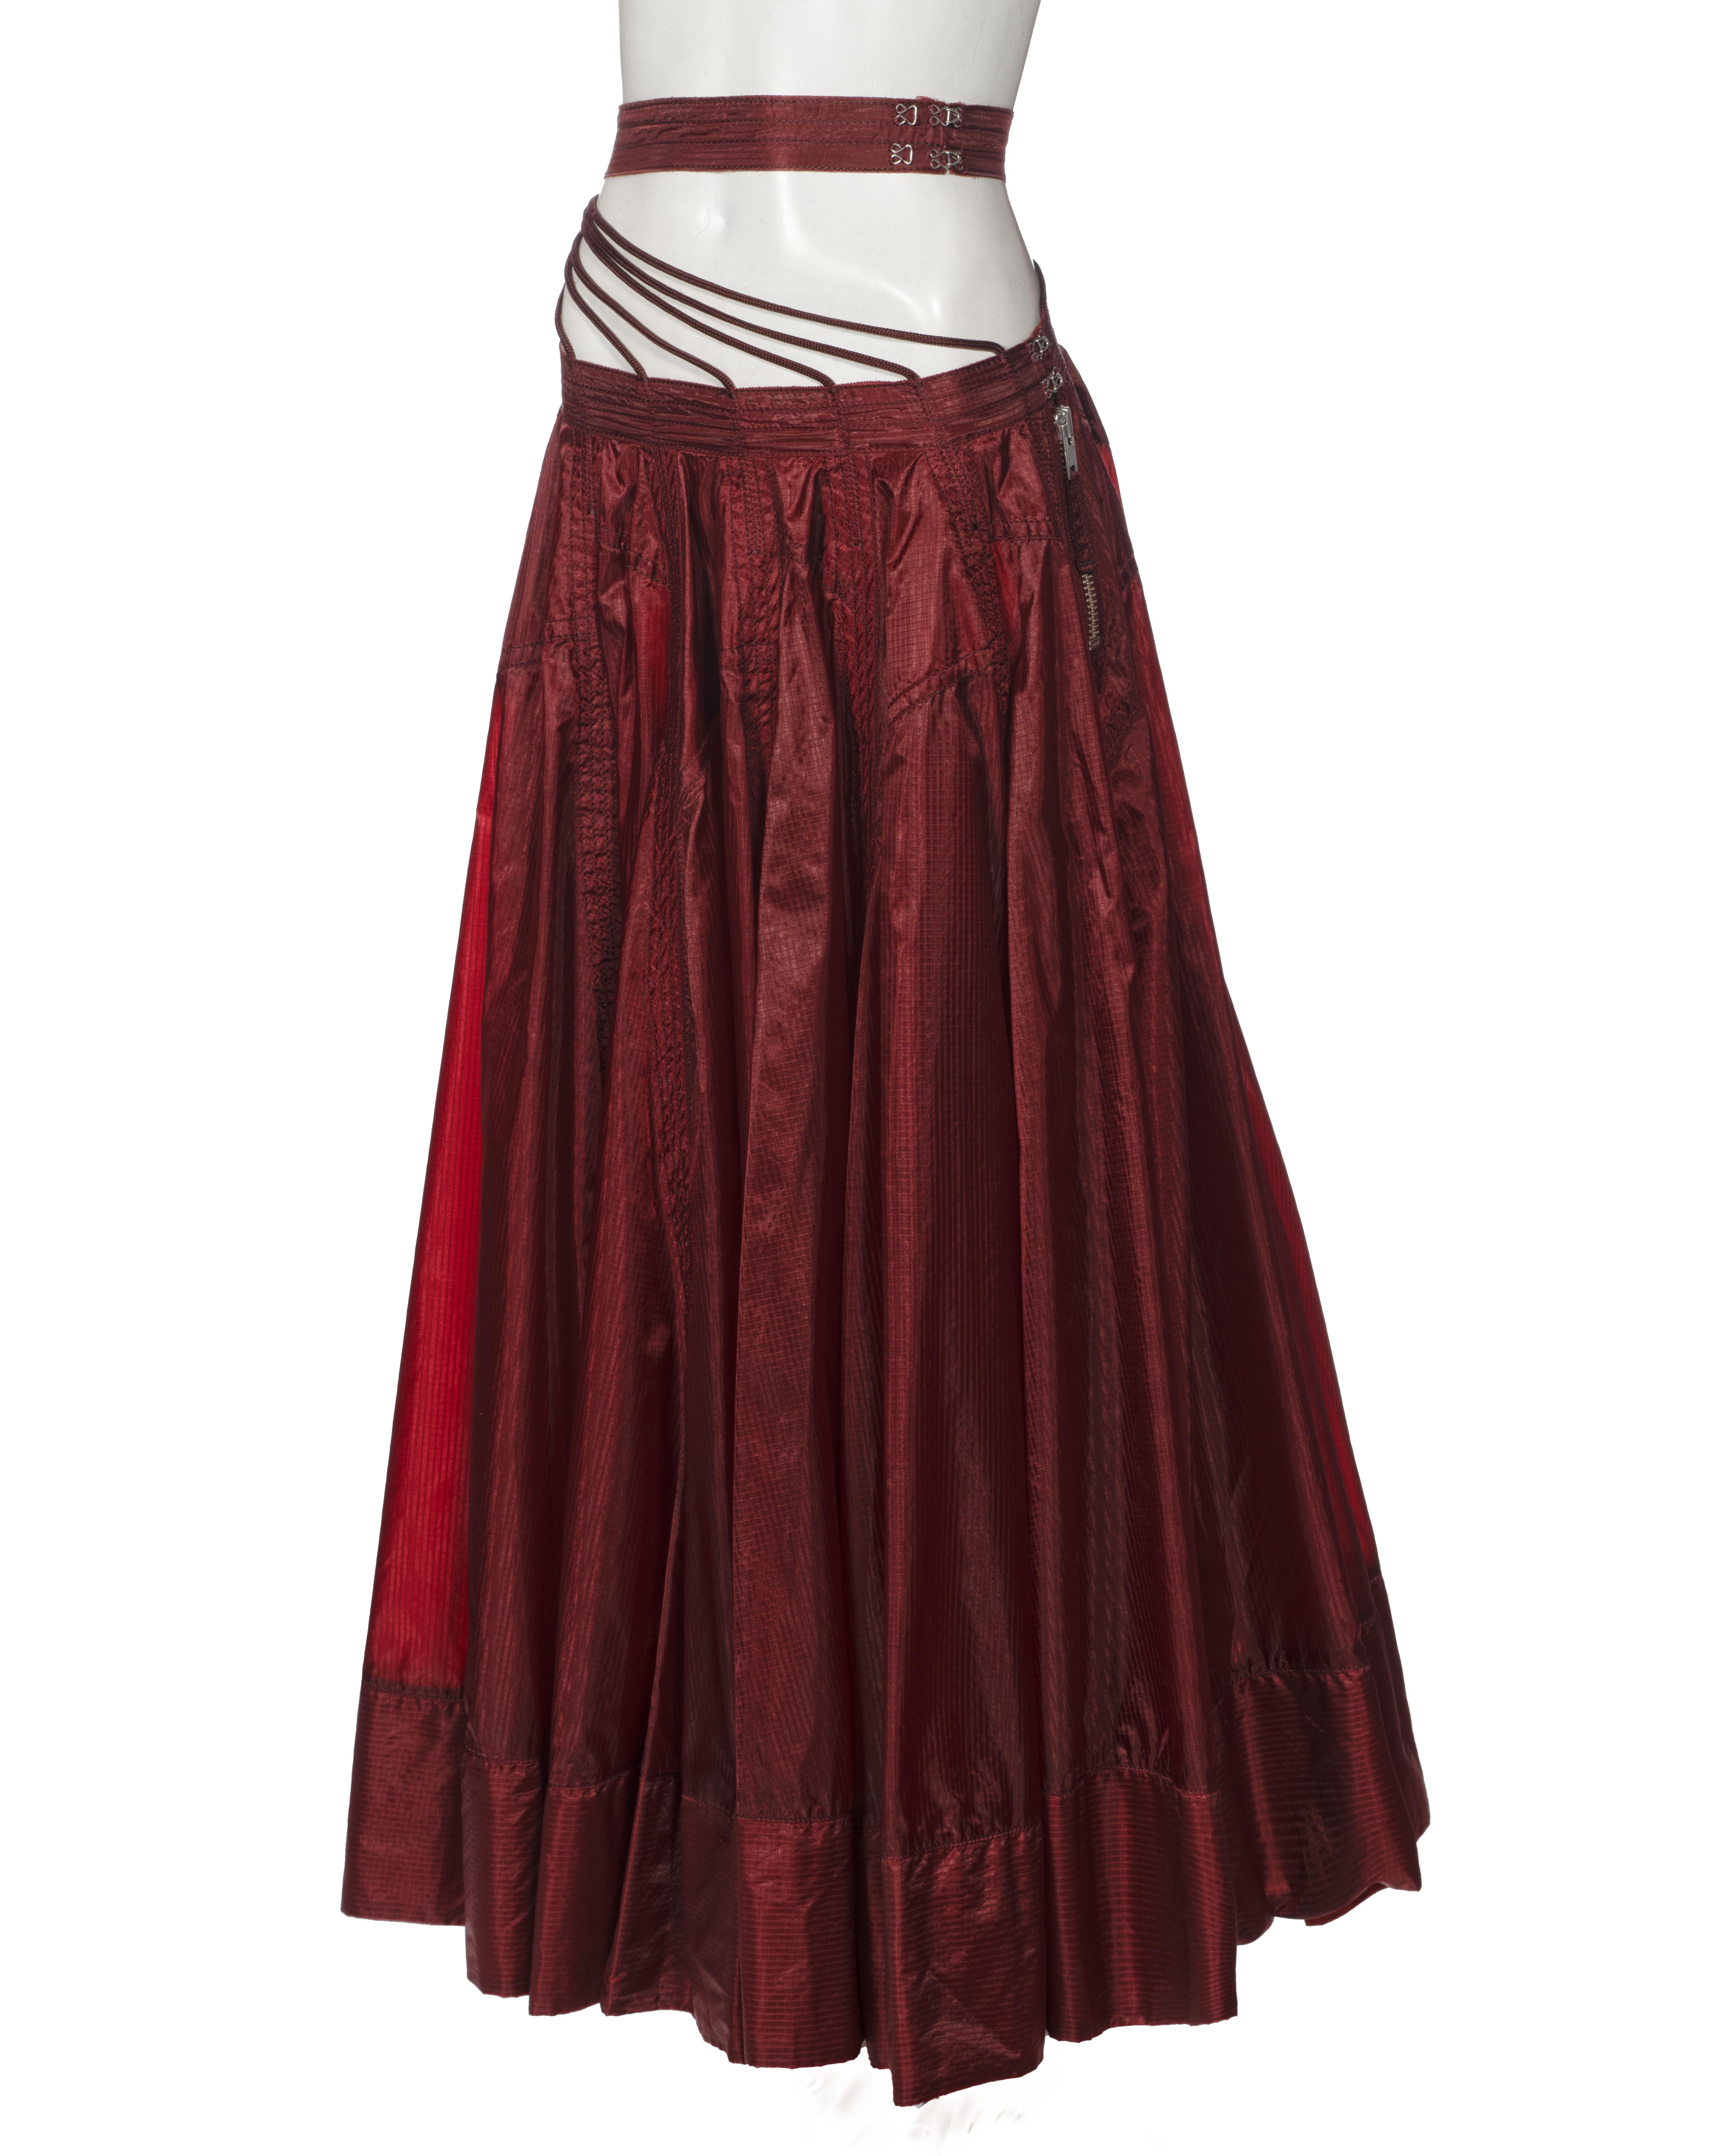 Jean Paul Gaultier Burgundy Ripstop Nylon Strappy-Waist Maxi Skirt, ss 2002 For Sale 6